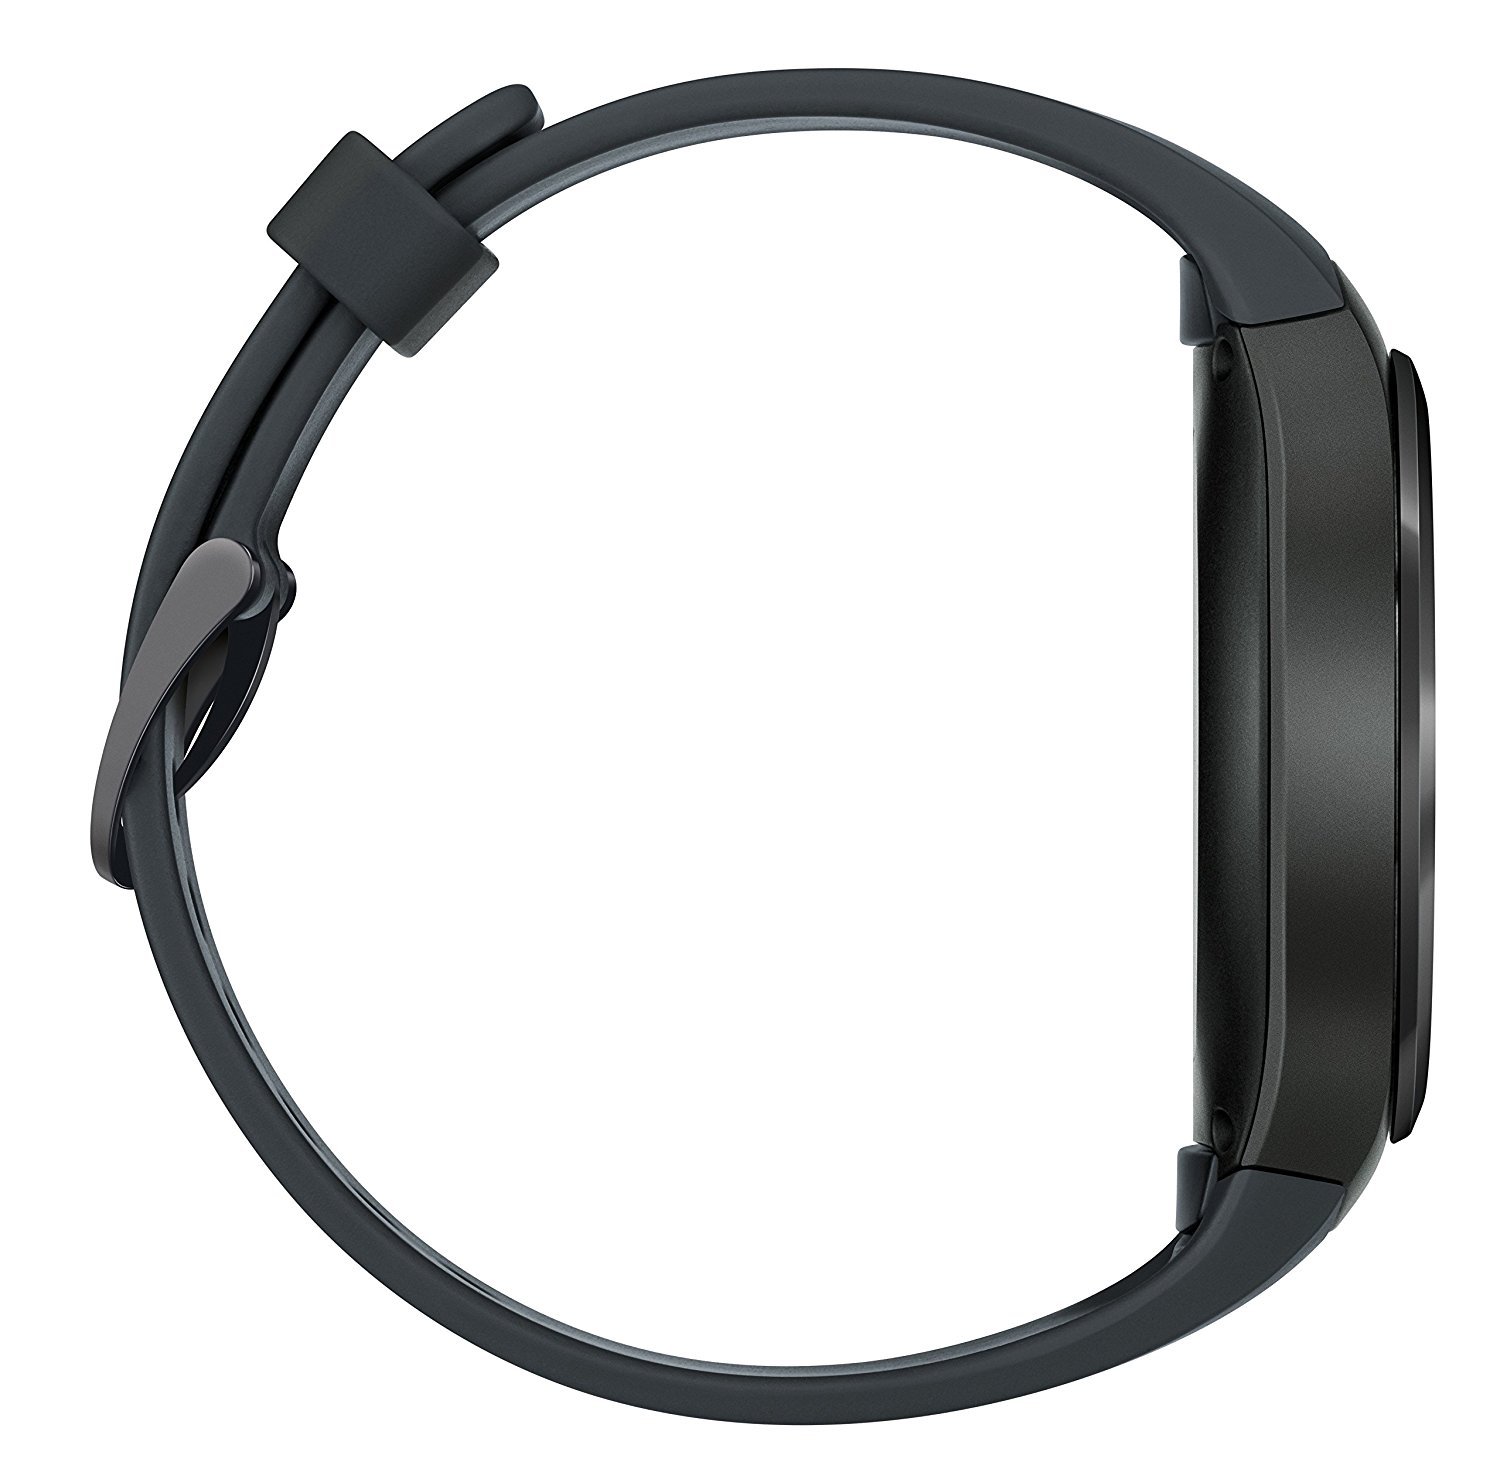 Samsung Gear S2 Wi-Fi Smartwatch - Fitness Tracker - Dark Gray (Renewed)